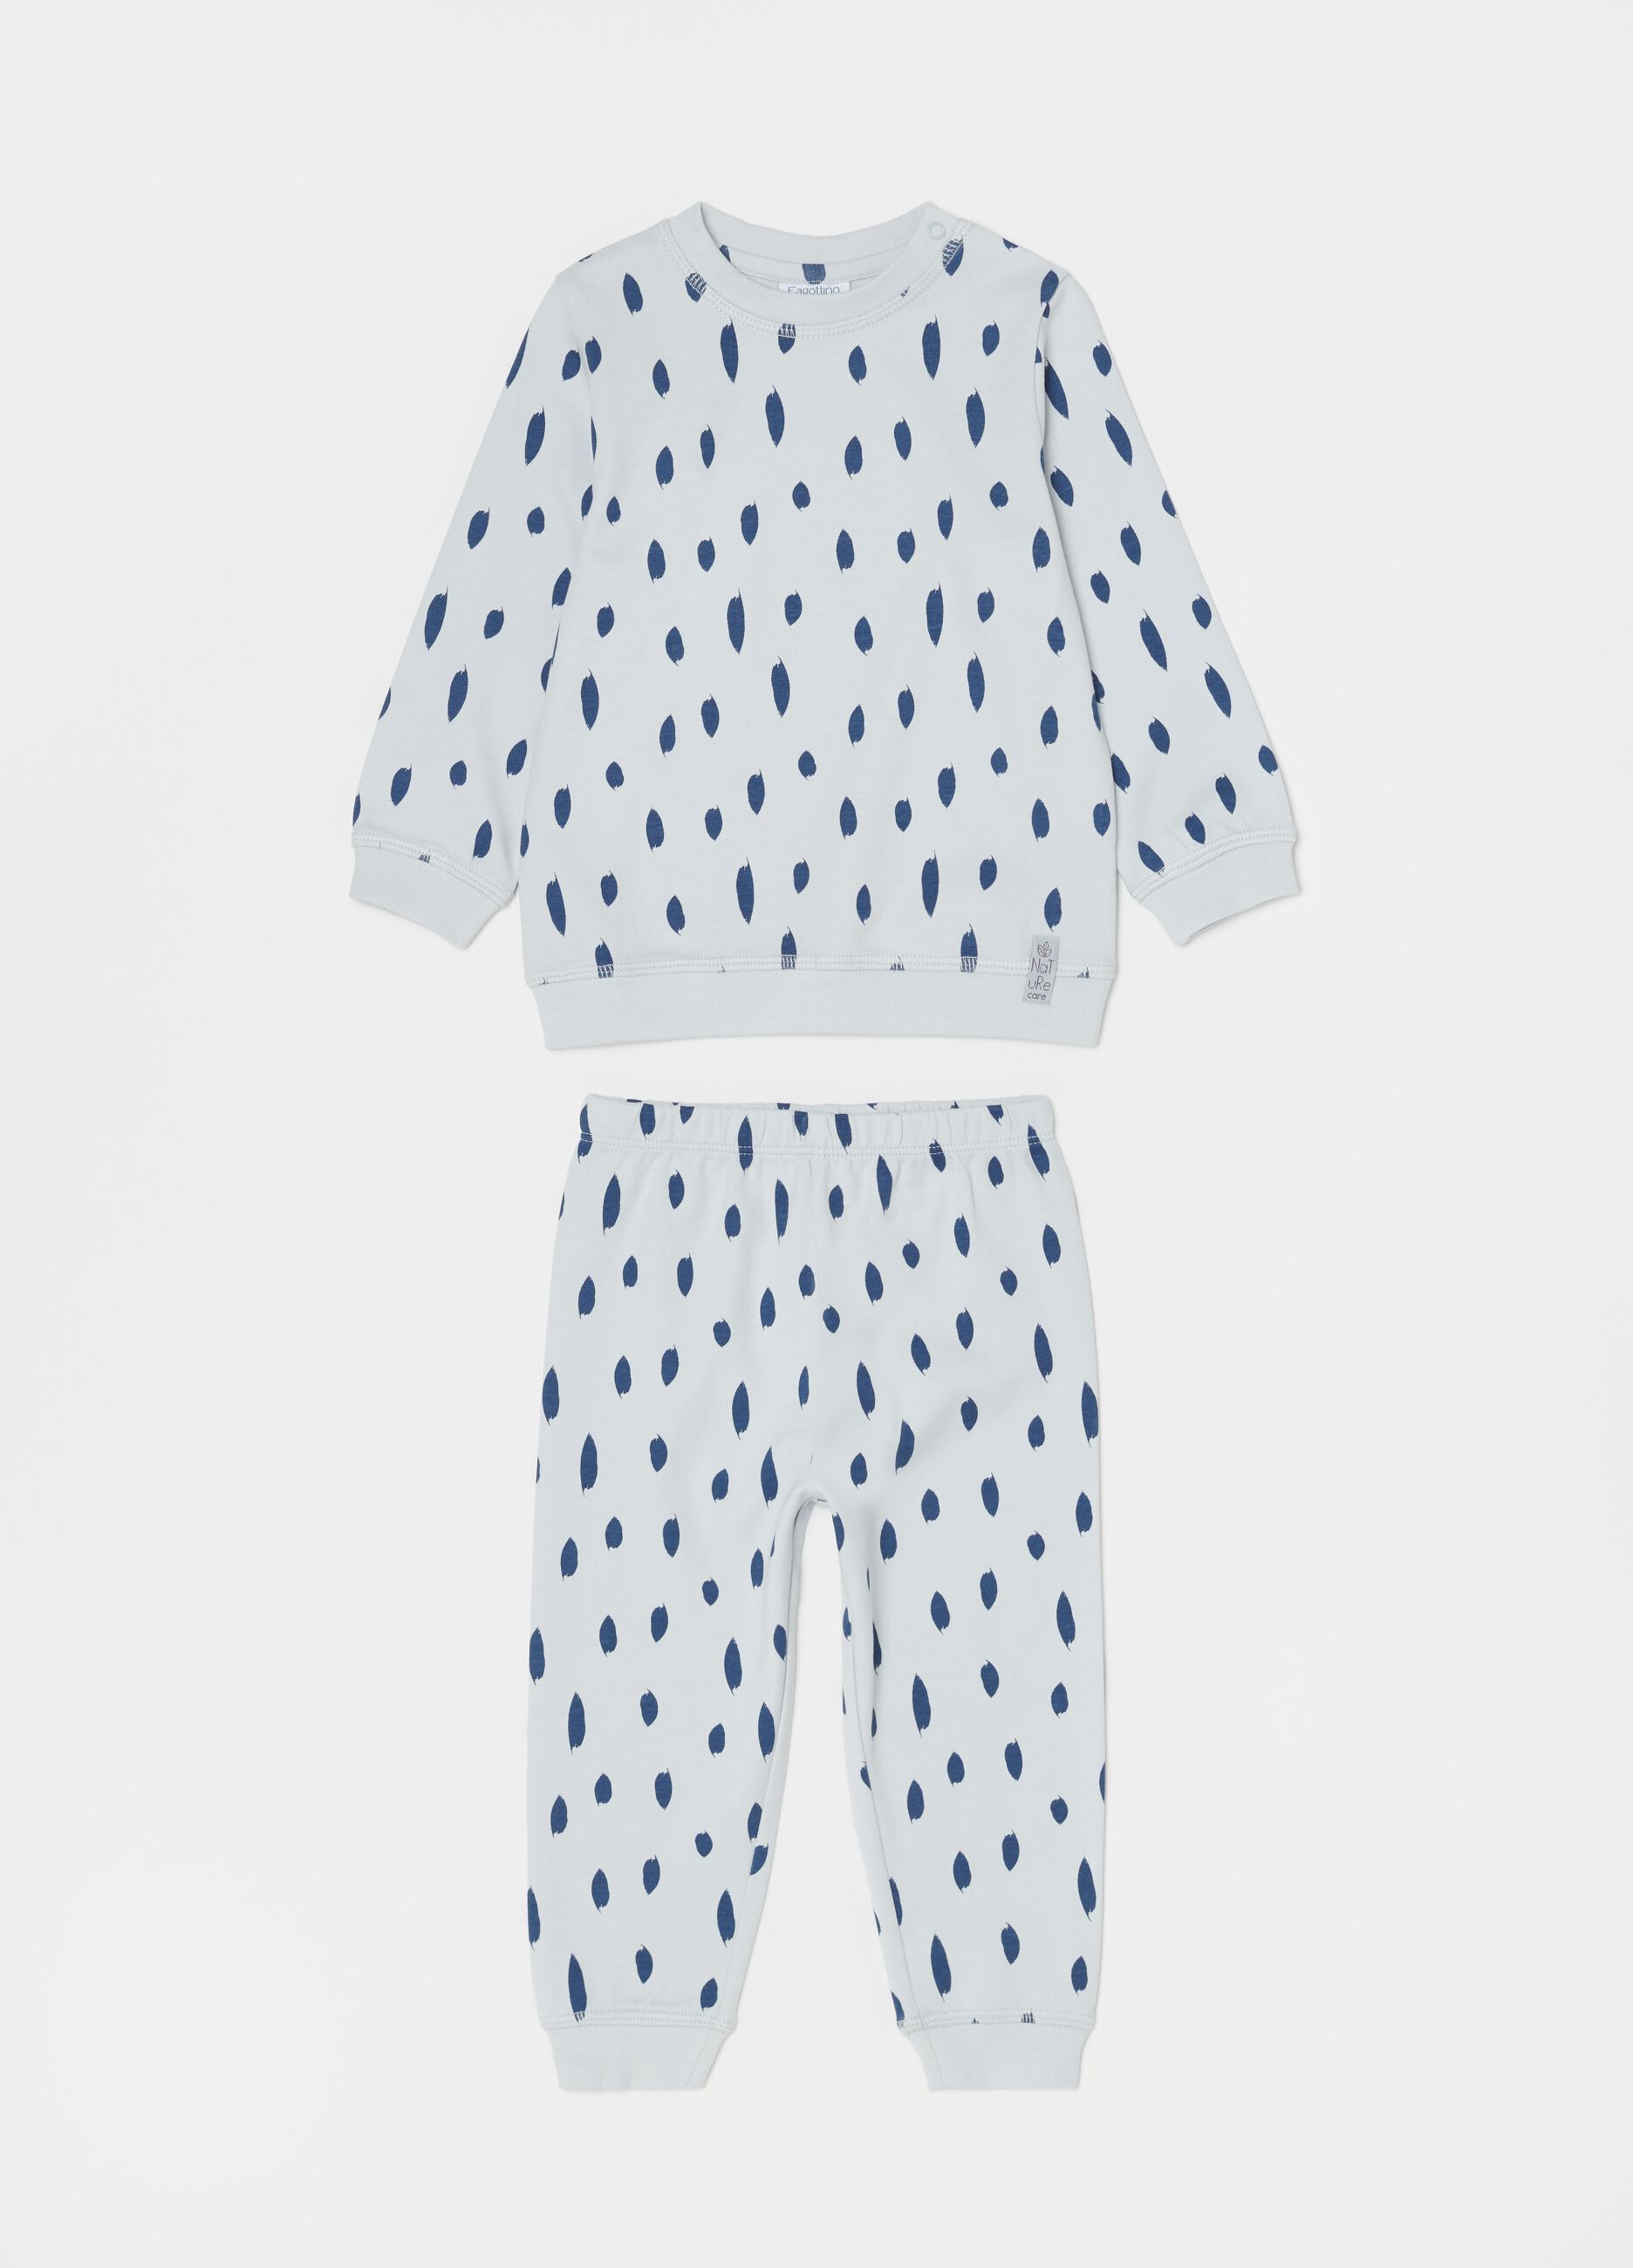 Pijama largo de algodón 100% estampado follaje